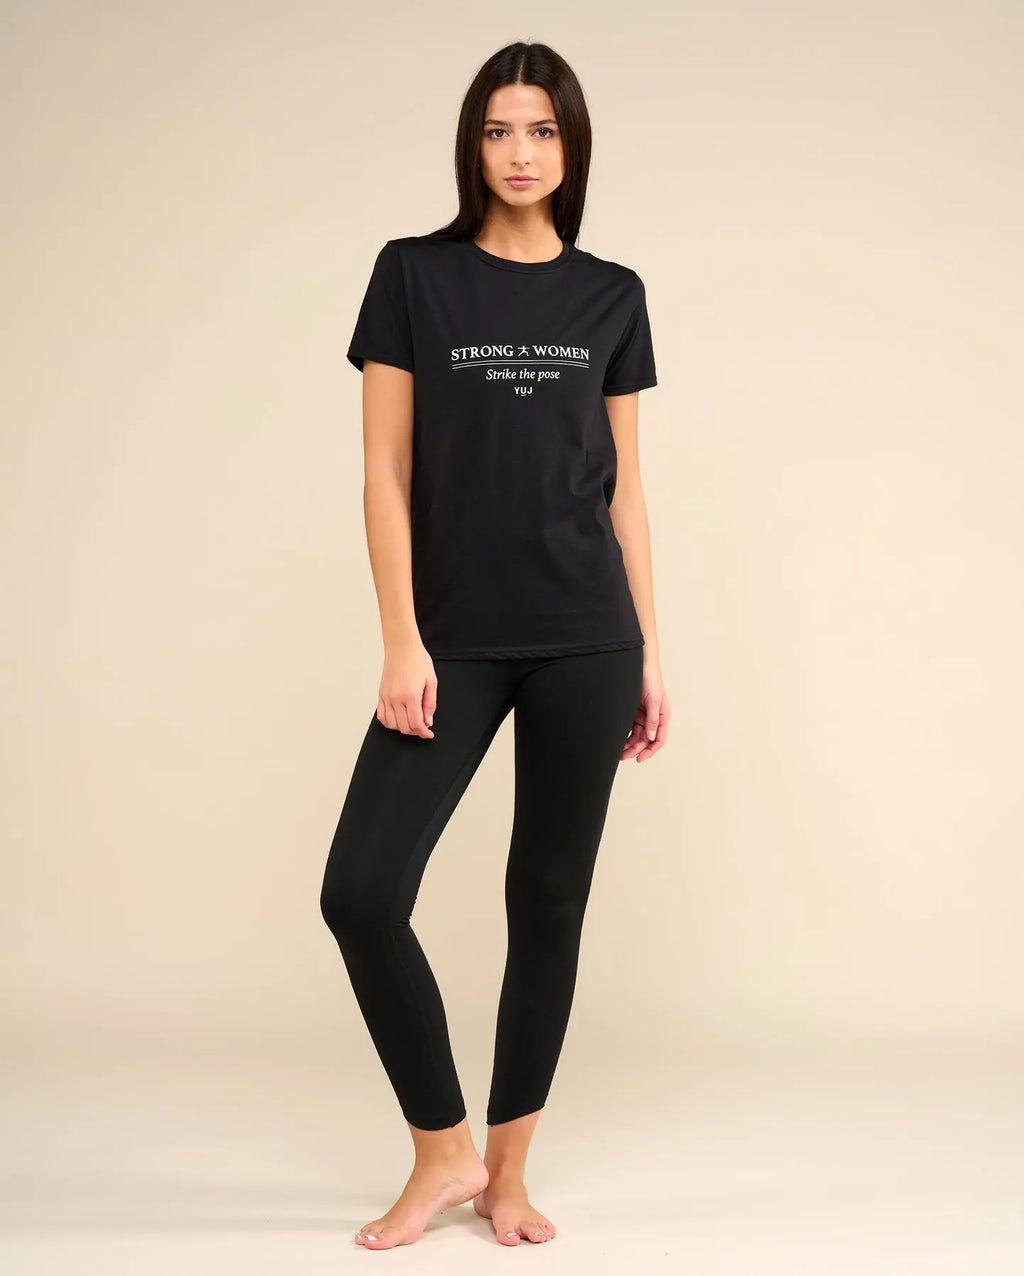 T-shirt en coton noir STRONG WOMEN YUJ Paris